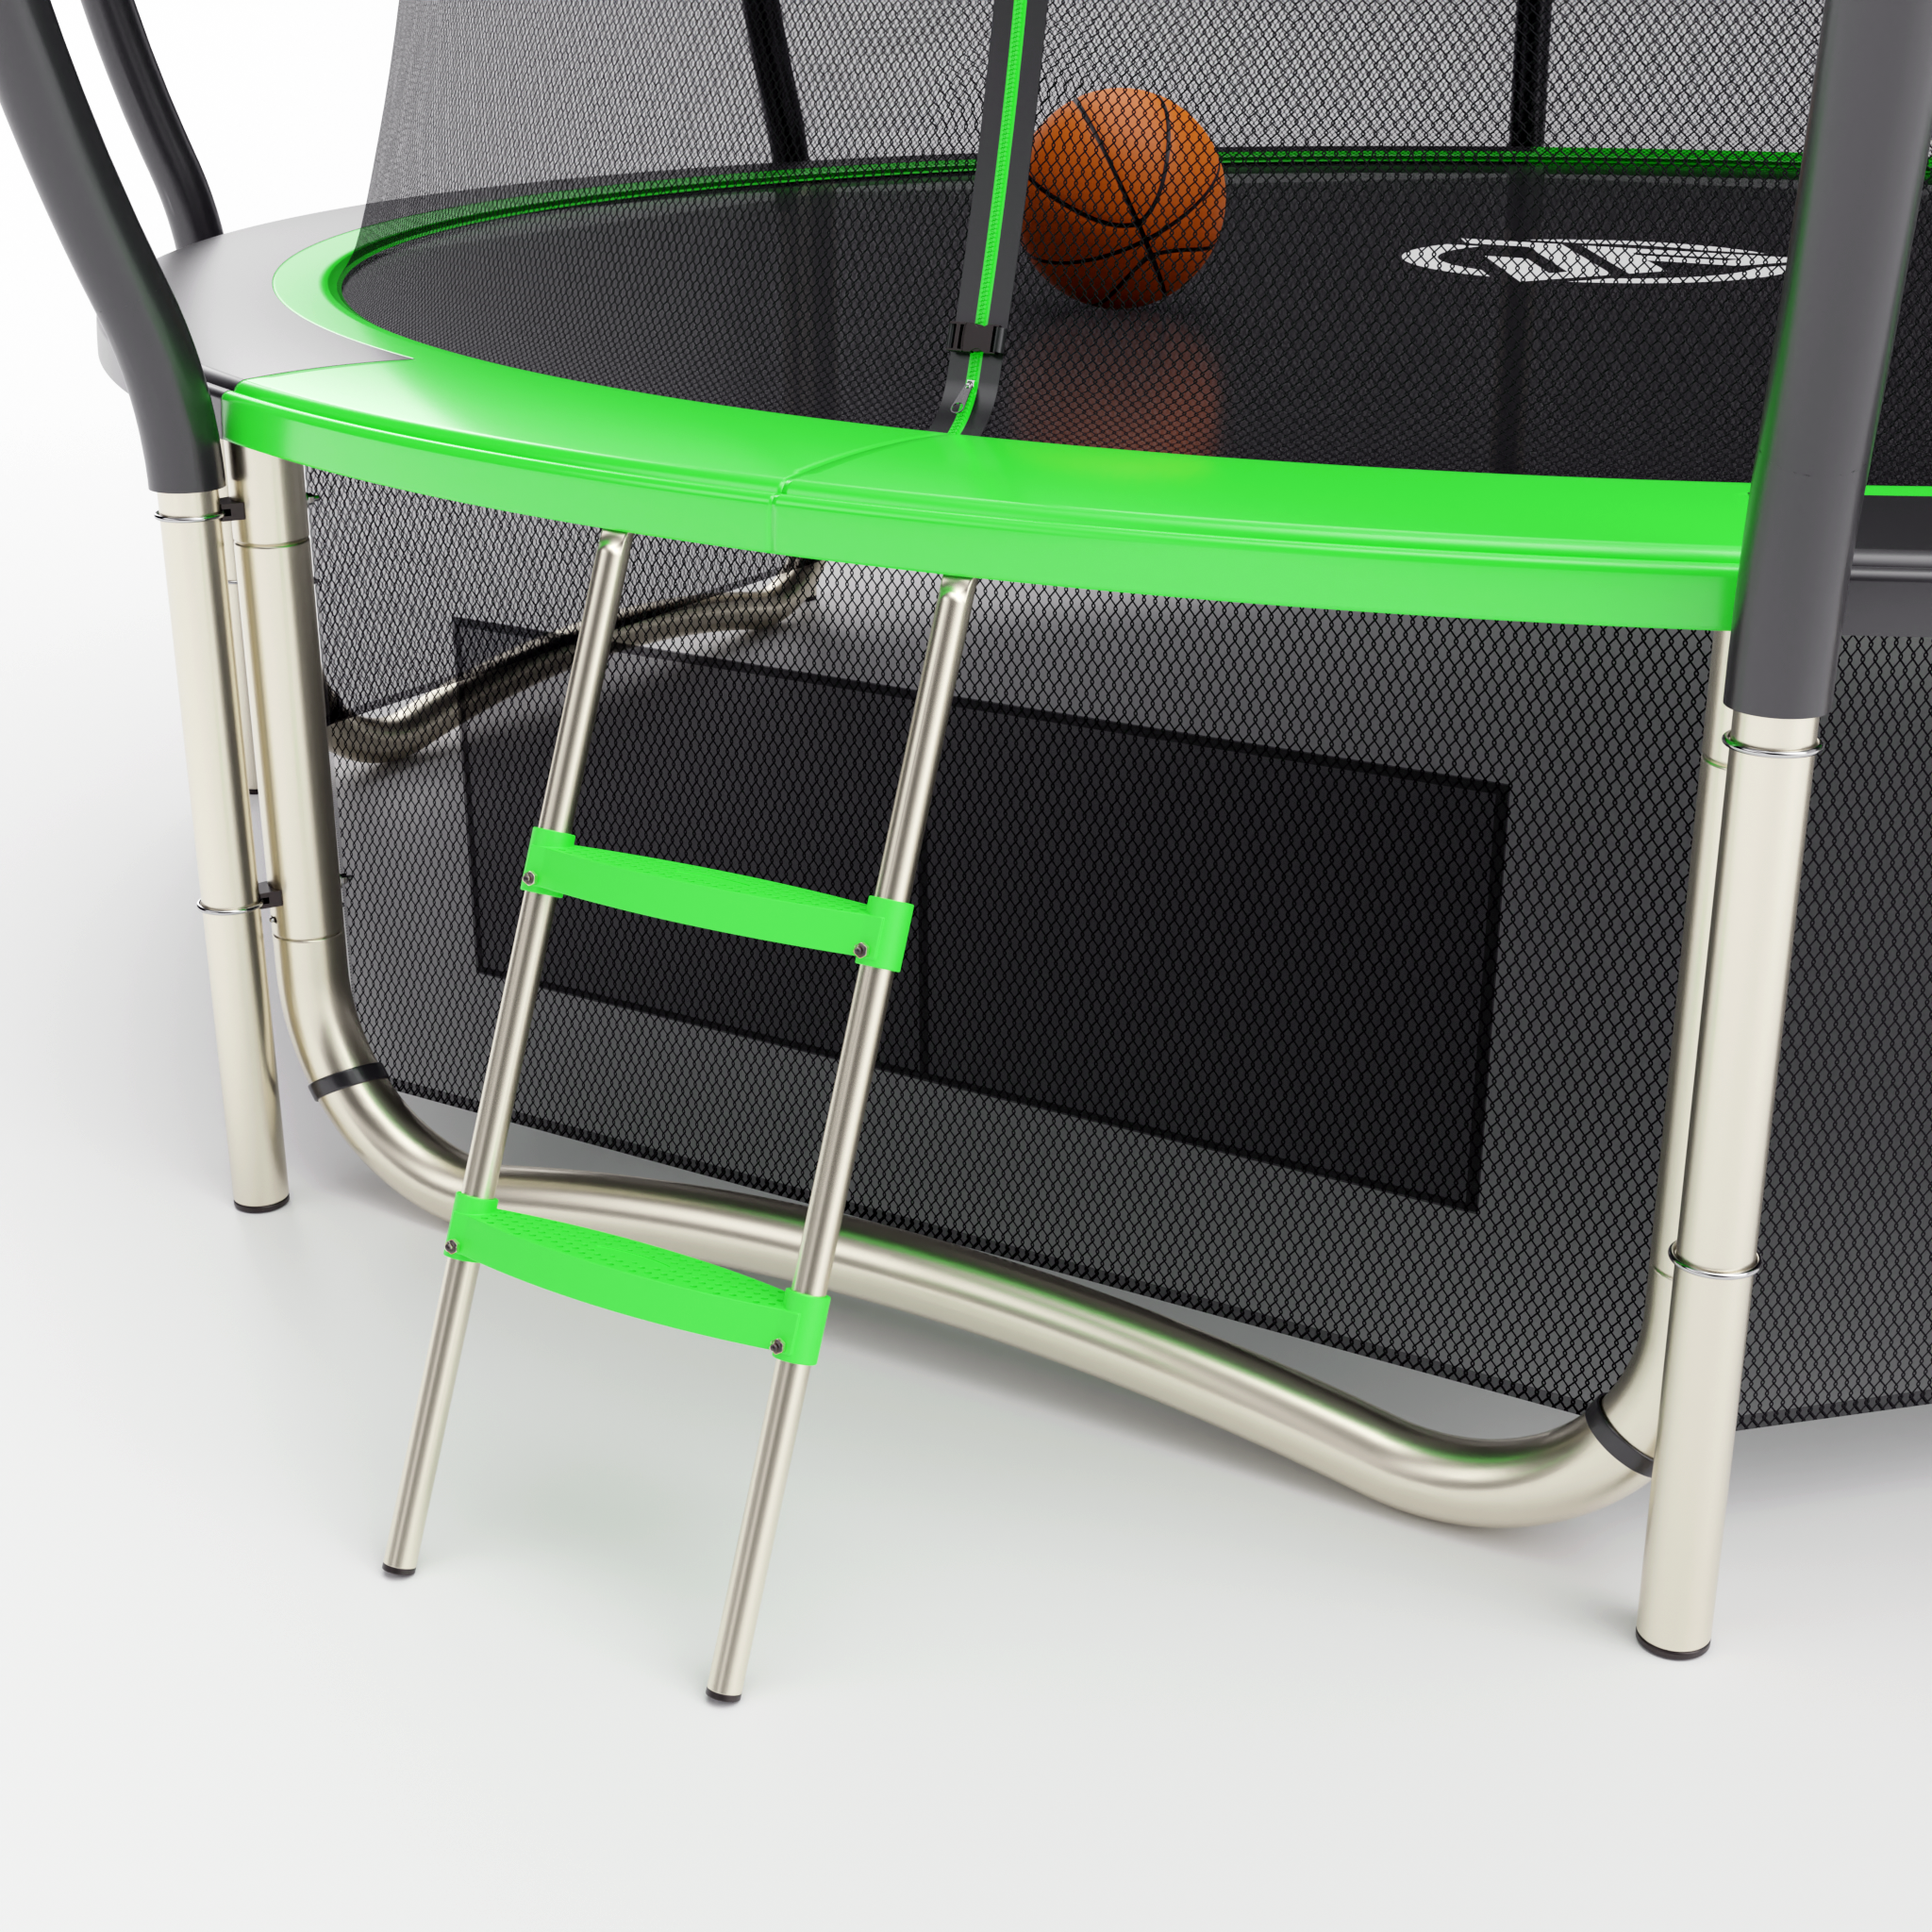 Фото 4 - Батут Jump Power 10 ft Pro Inside Basket Green.